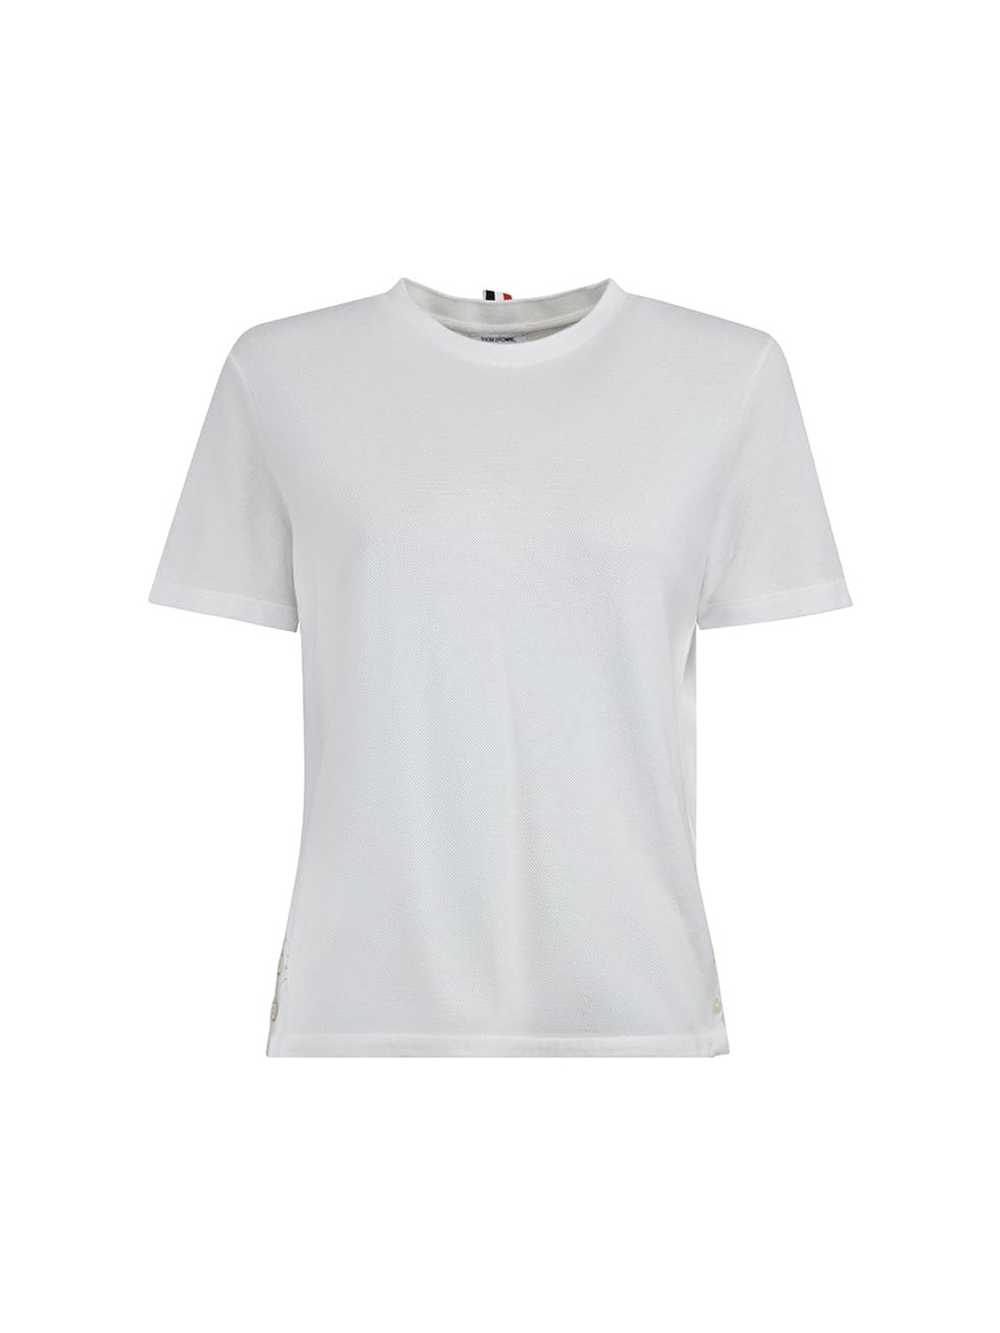 Thom Browne White Stripe Tape Detail T-Shirt - image 1